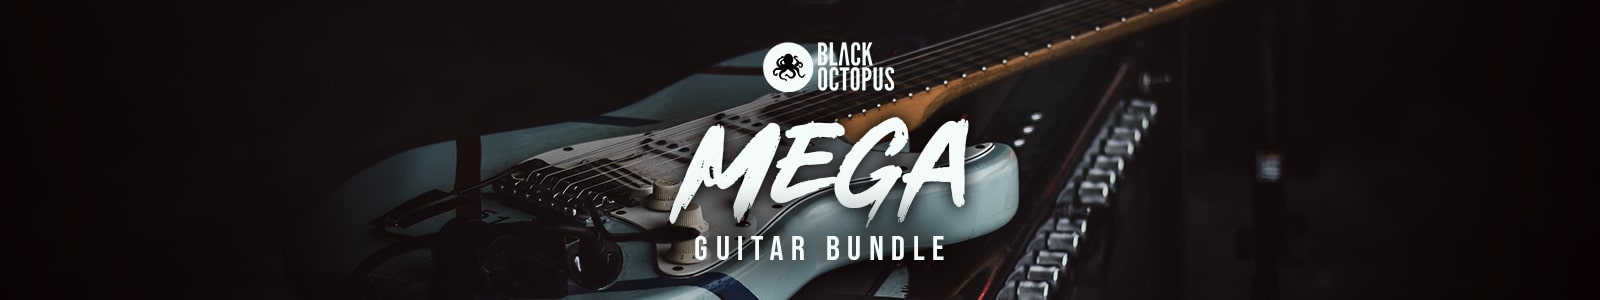 mega guitar bundle by black octopus